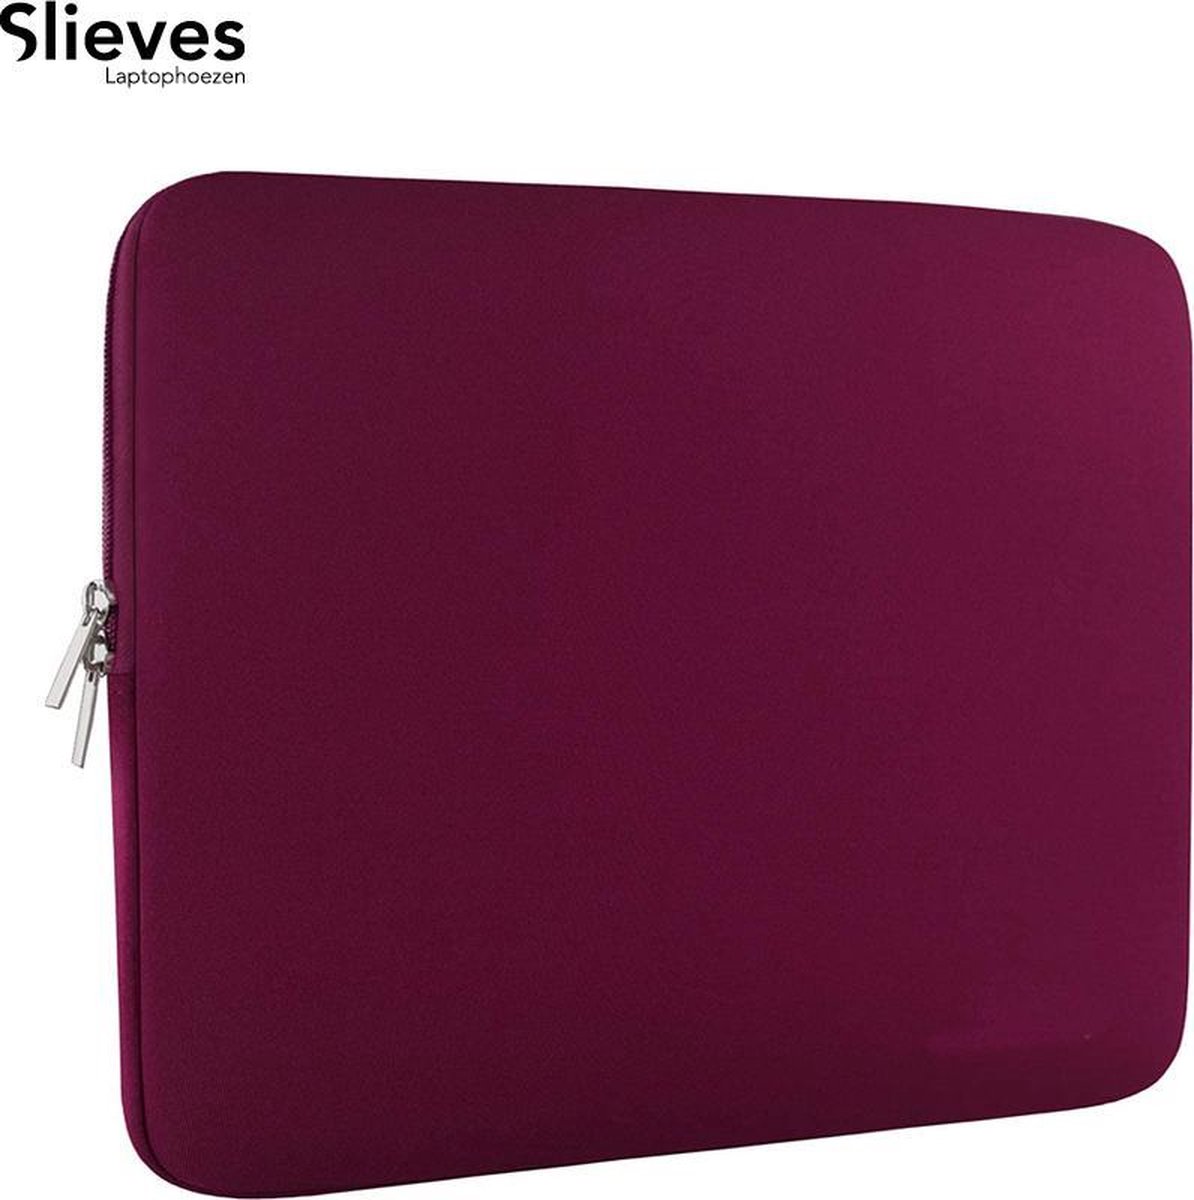 Resoneer stoom zege Slieves Laptophoes 15 6 inch - Laptop hoes Bordeaux Rood Neopreen -  Schokbestendig -... | bol.com